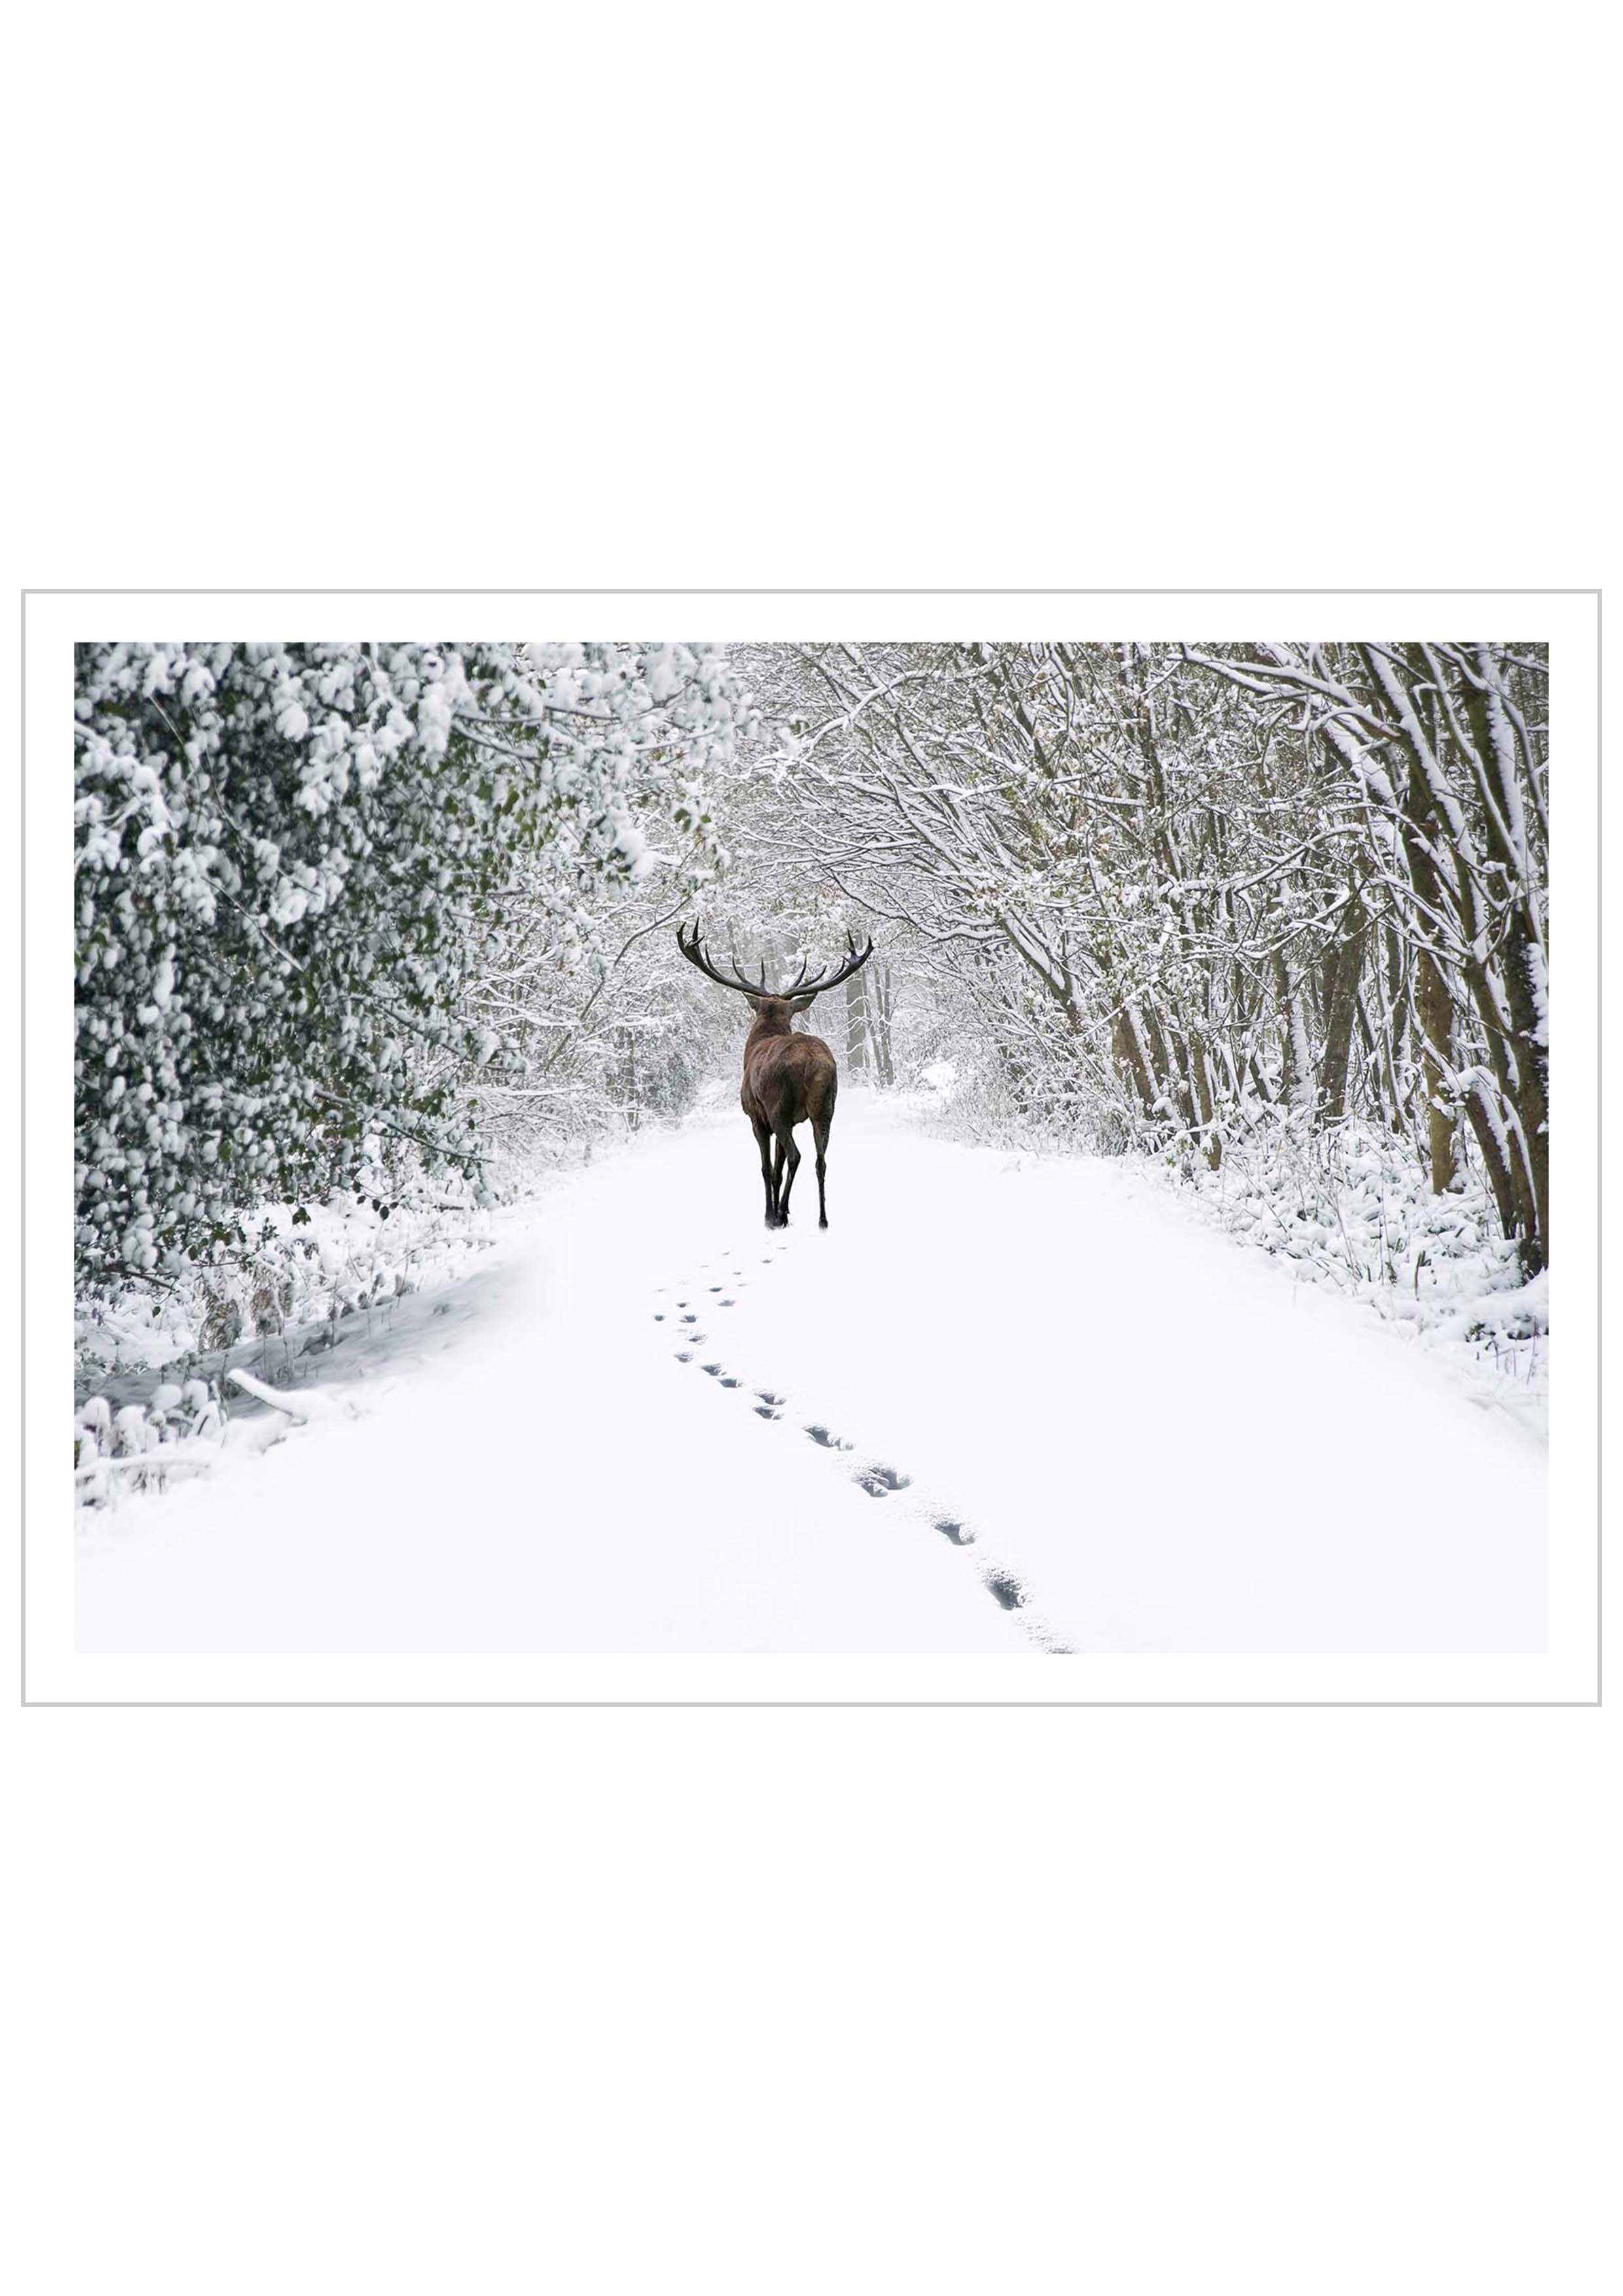 Deer Walking in Snowy Forest Poster